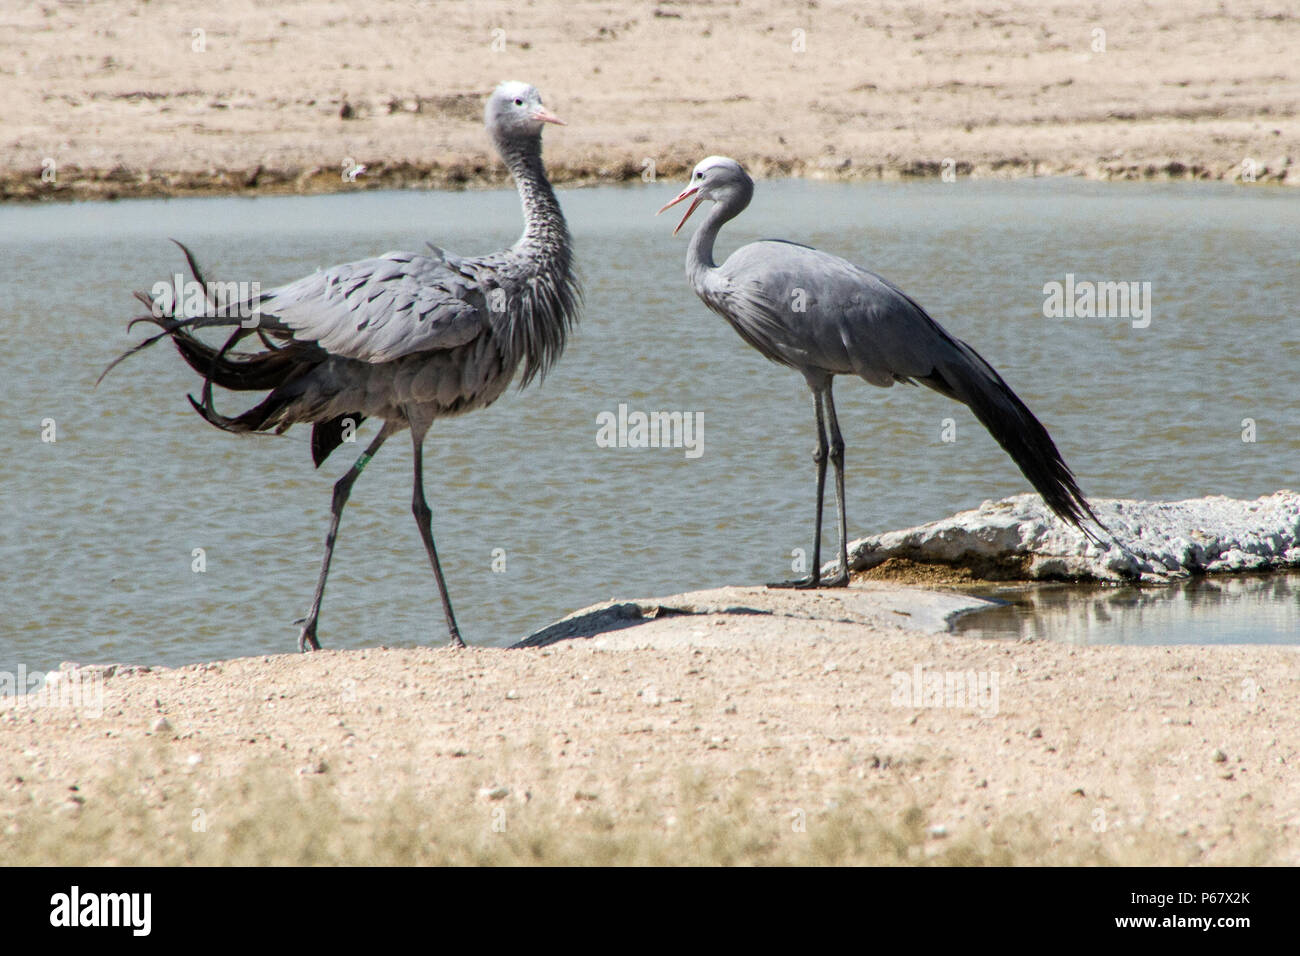 Two endangered Blue Cranes - Anthropoides Paradiseus - displaying by waterhole in Etosha National Park. Stock Photo